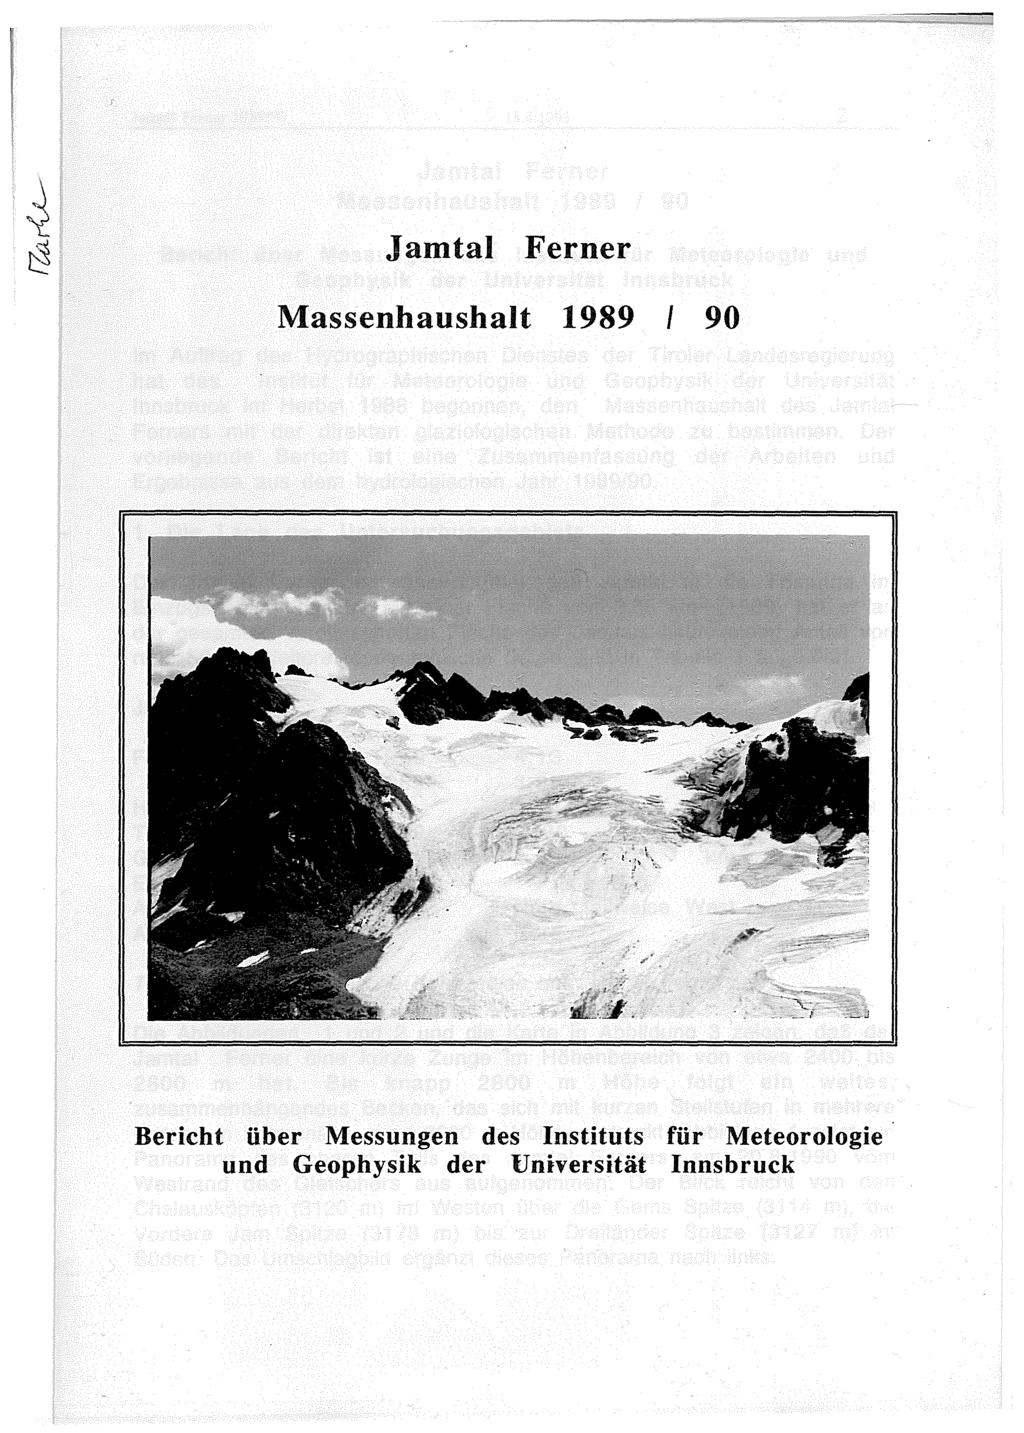 Jamtal Ferner Massenhaushalt 1989 I 90 Bericht über Messungen des